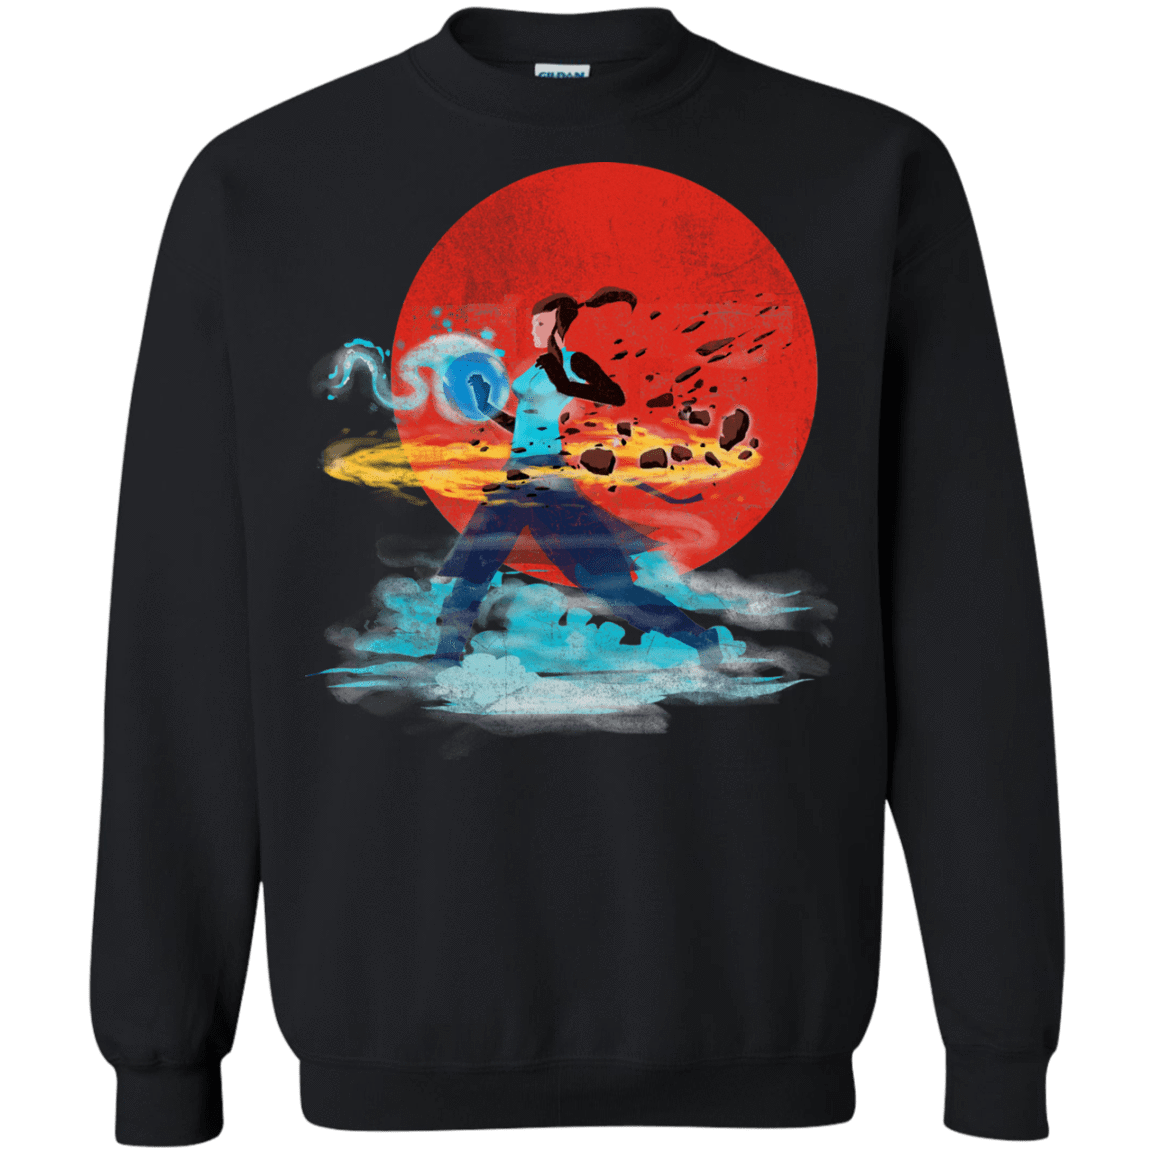 Sweatshirts Black / S 4 powers Crewneck Sweatshirt